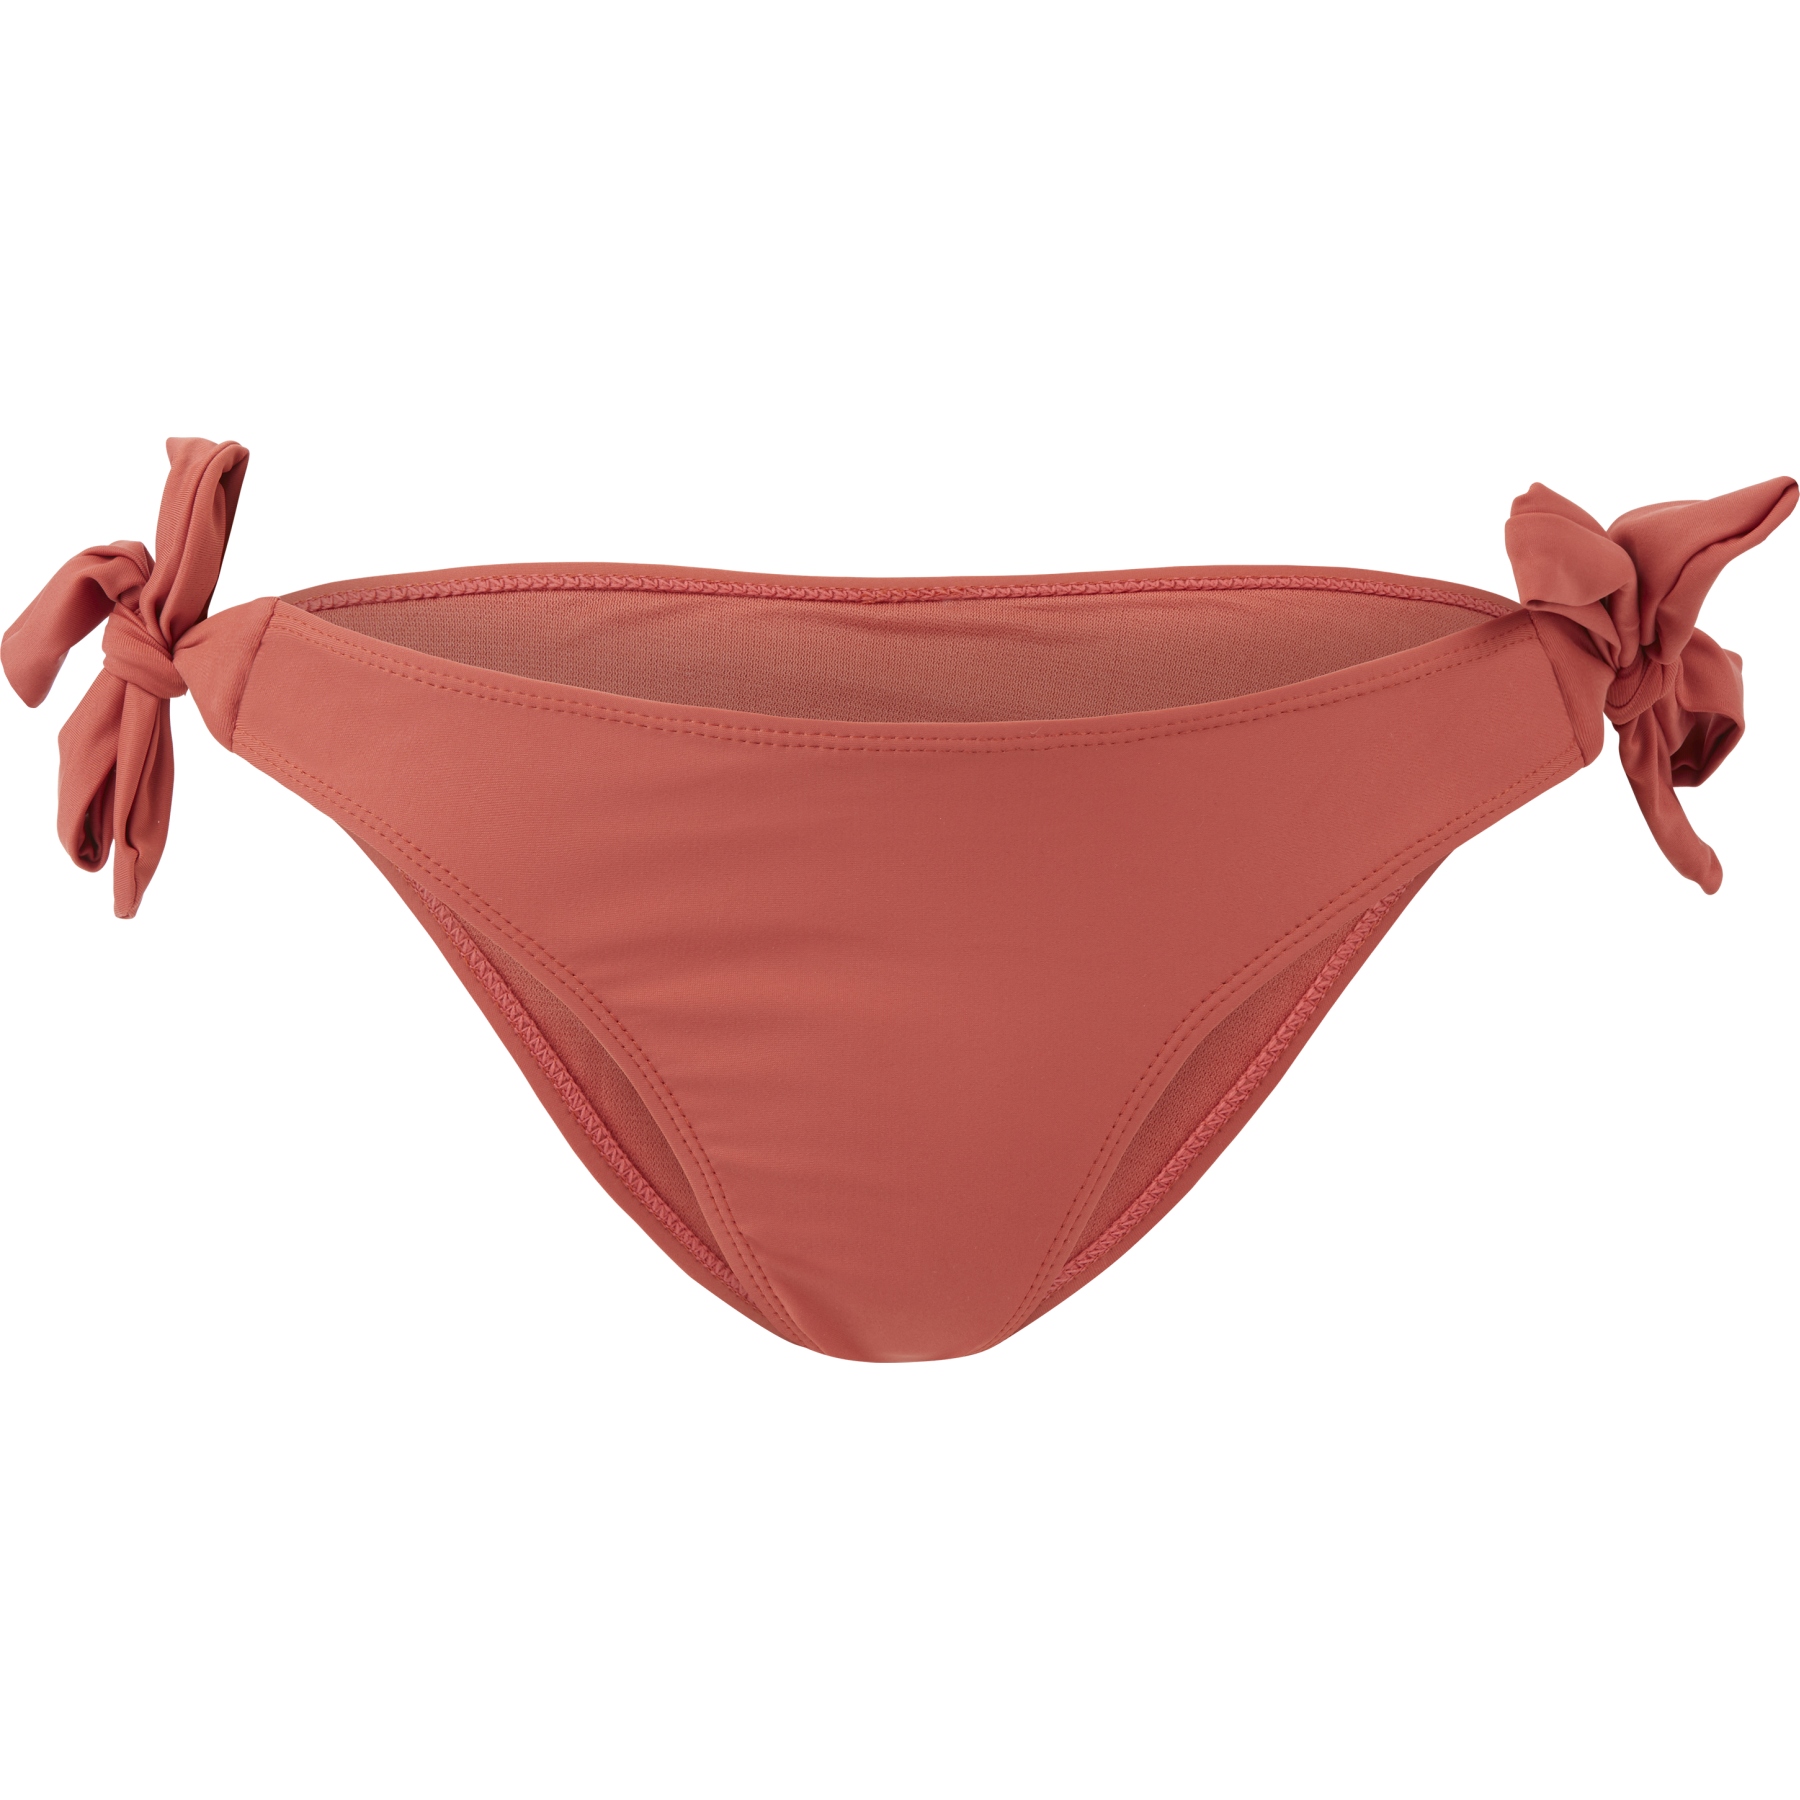 Produktbild von Picture Anise Bottoms Bikini Slip Damen - Fade rose